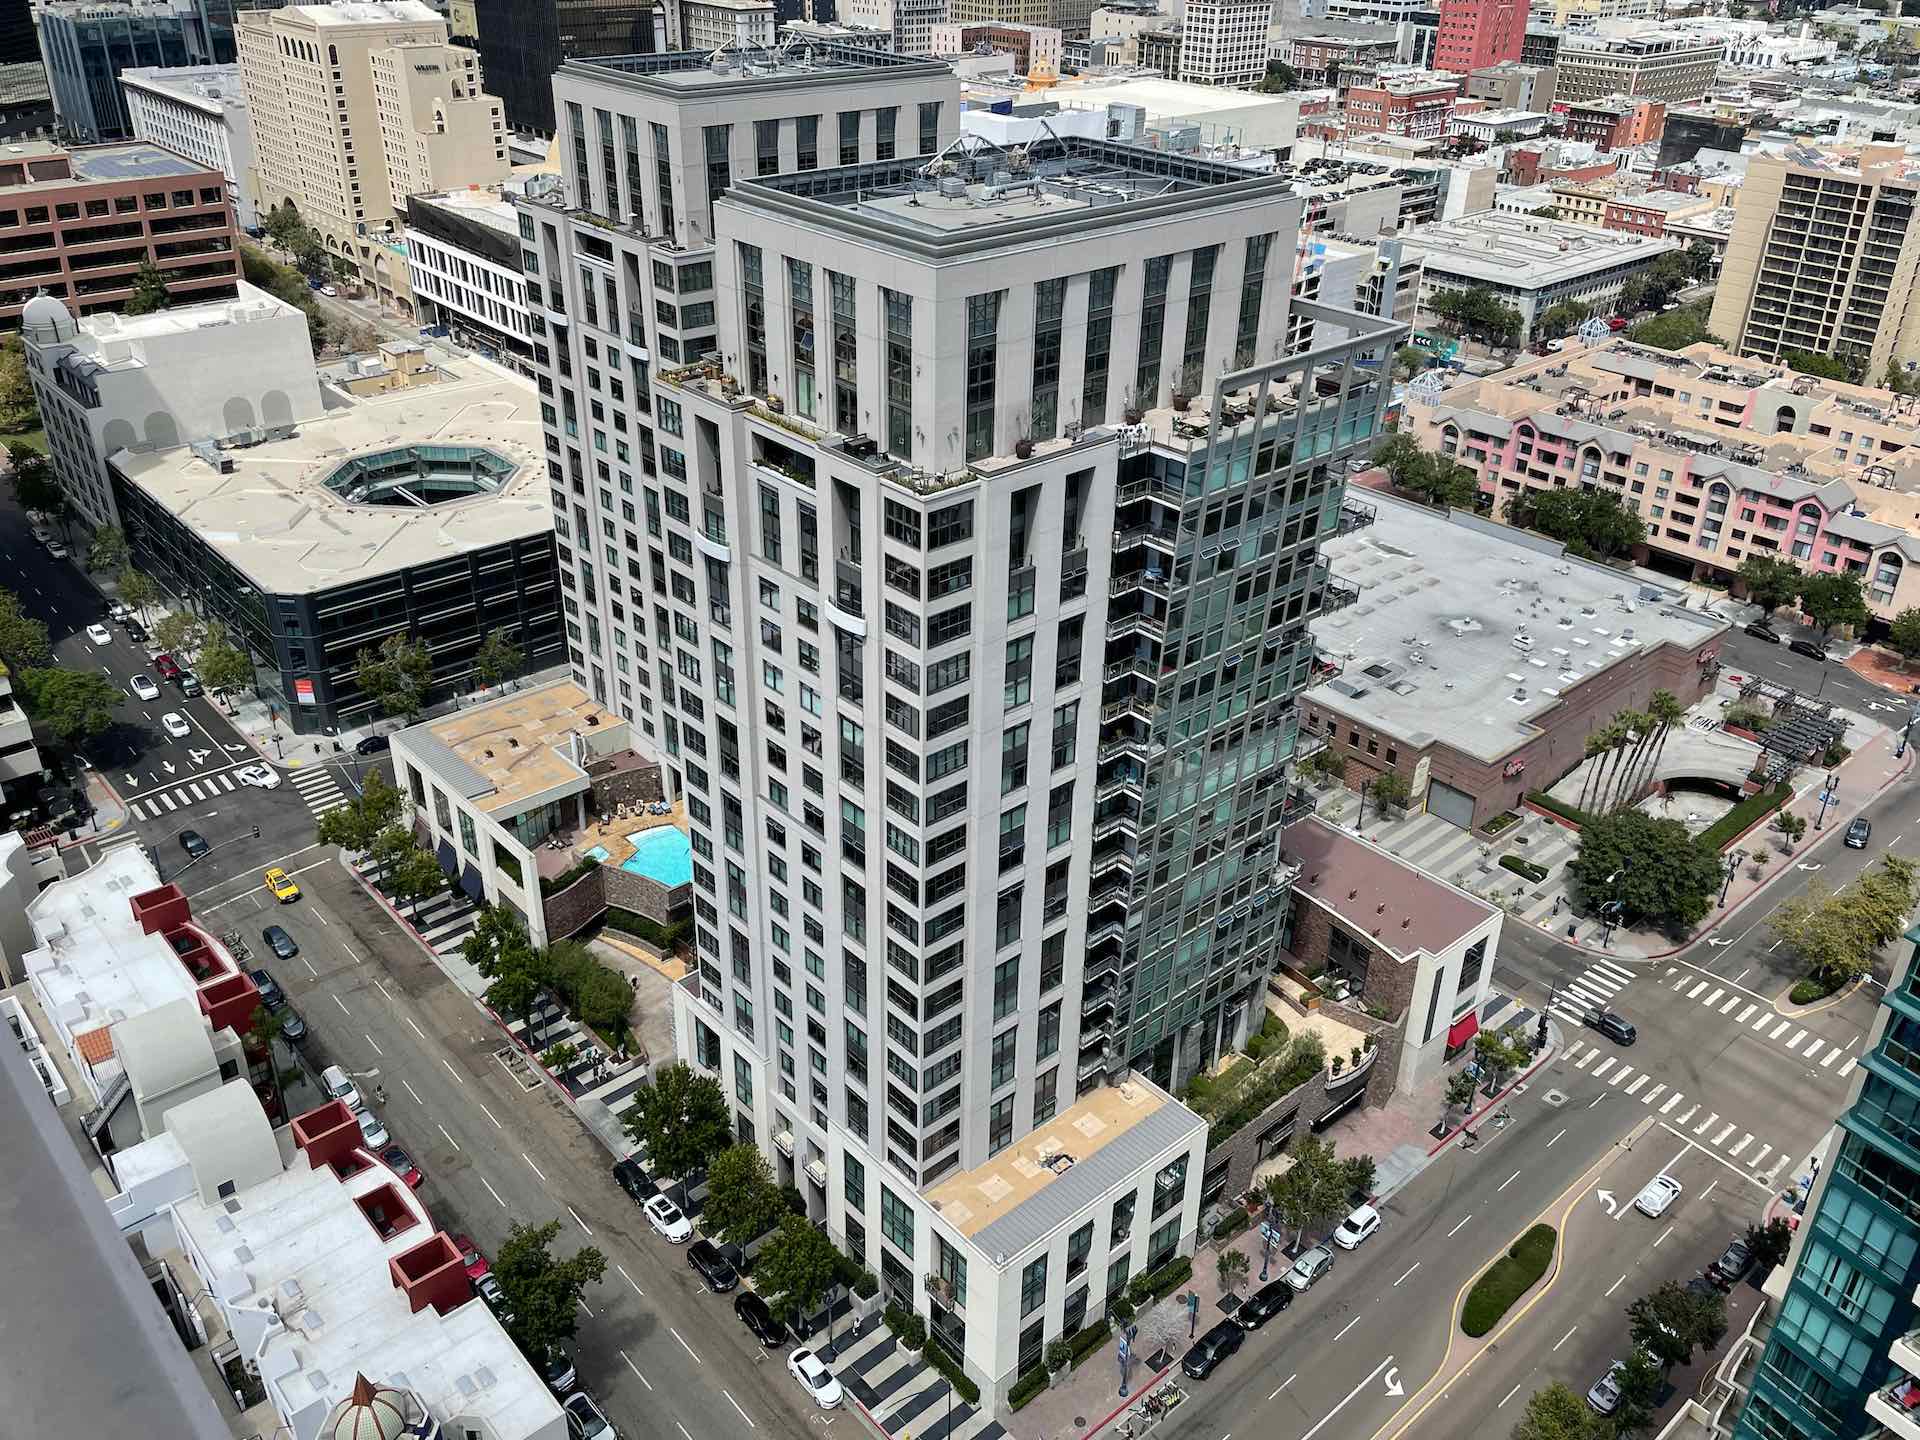 Renaissance condominium building in downtown San Diego